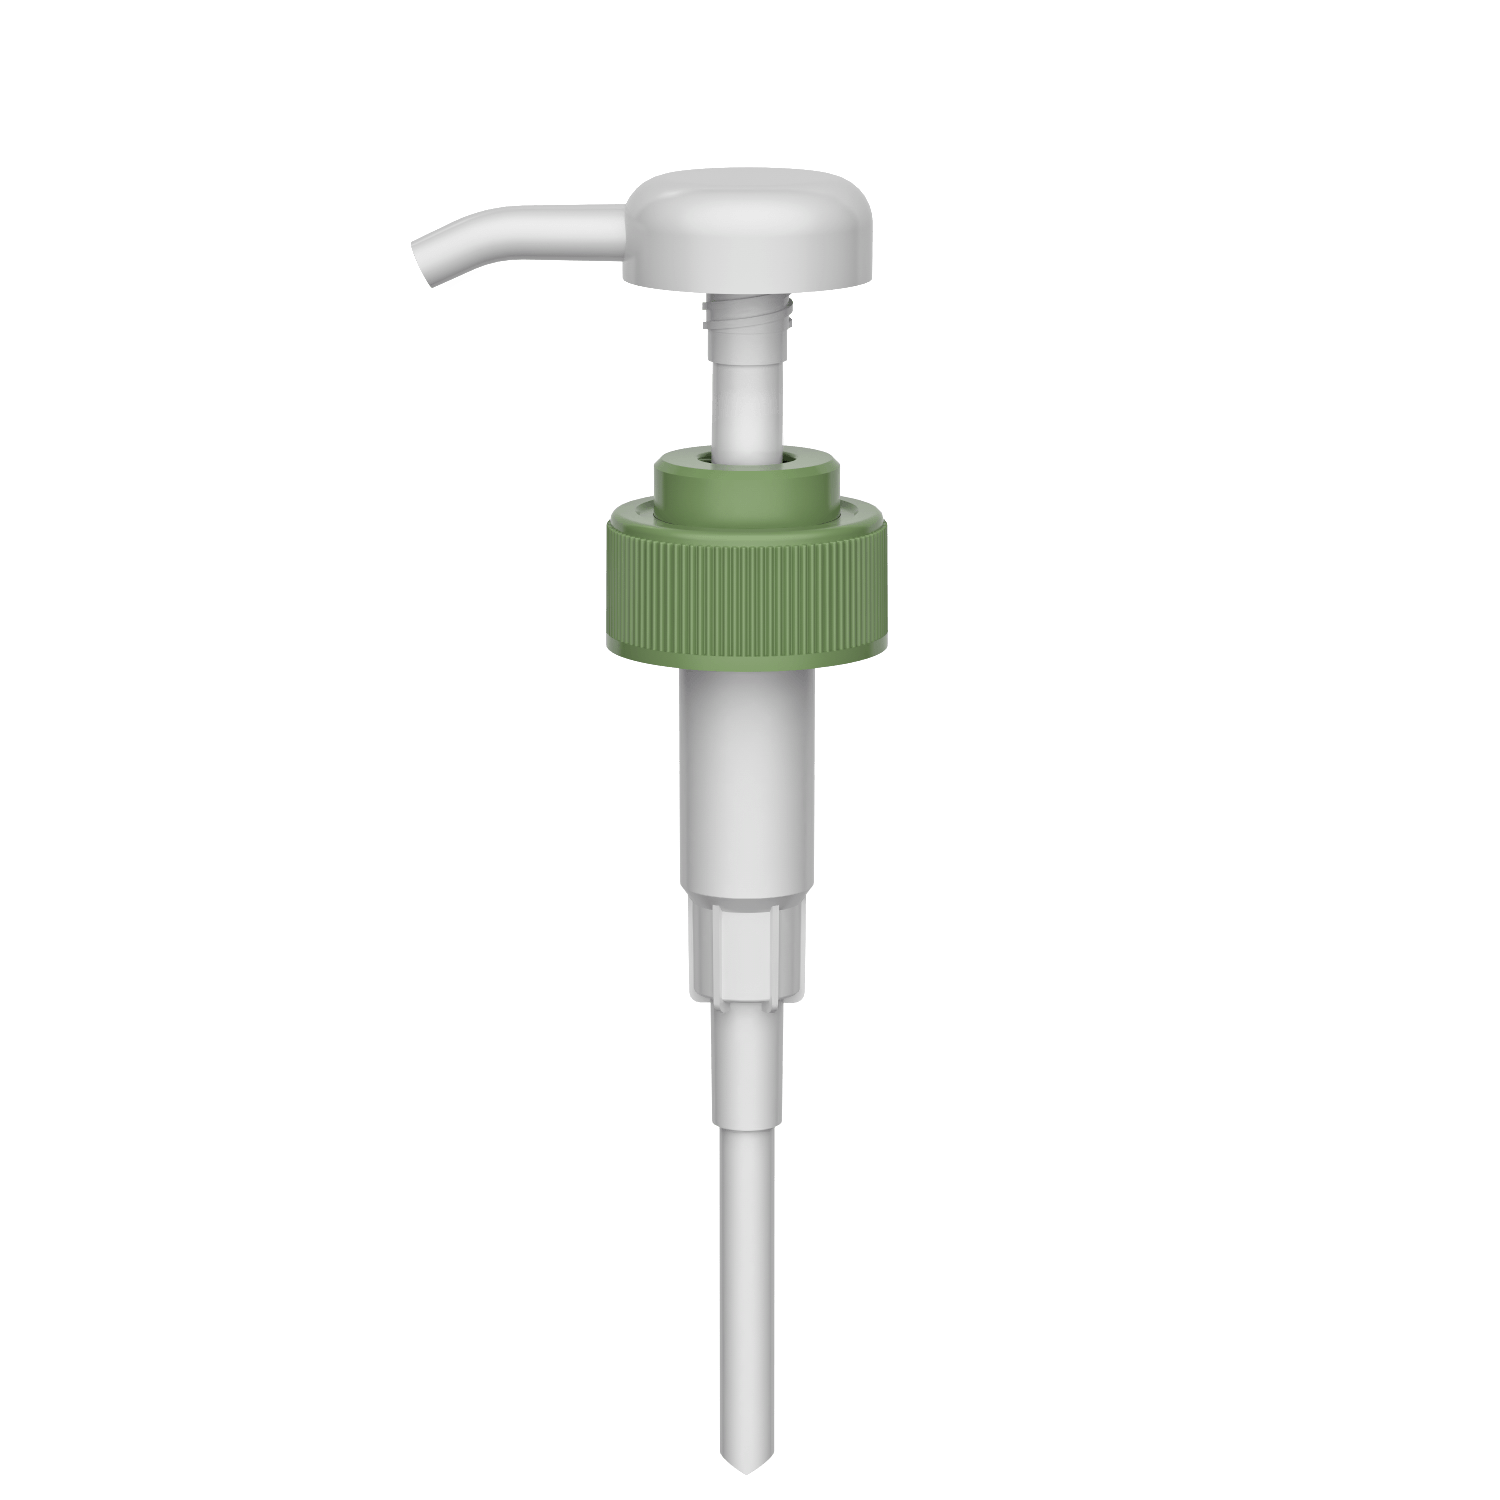 HD-608C 31/410 screw high dosage washing shampoo output dispenser 3.5-4.0CC lotion pump